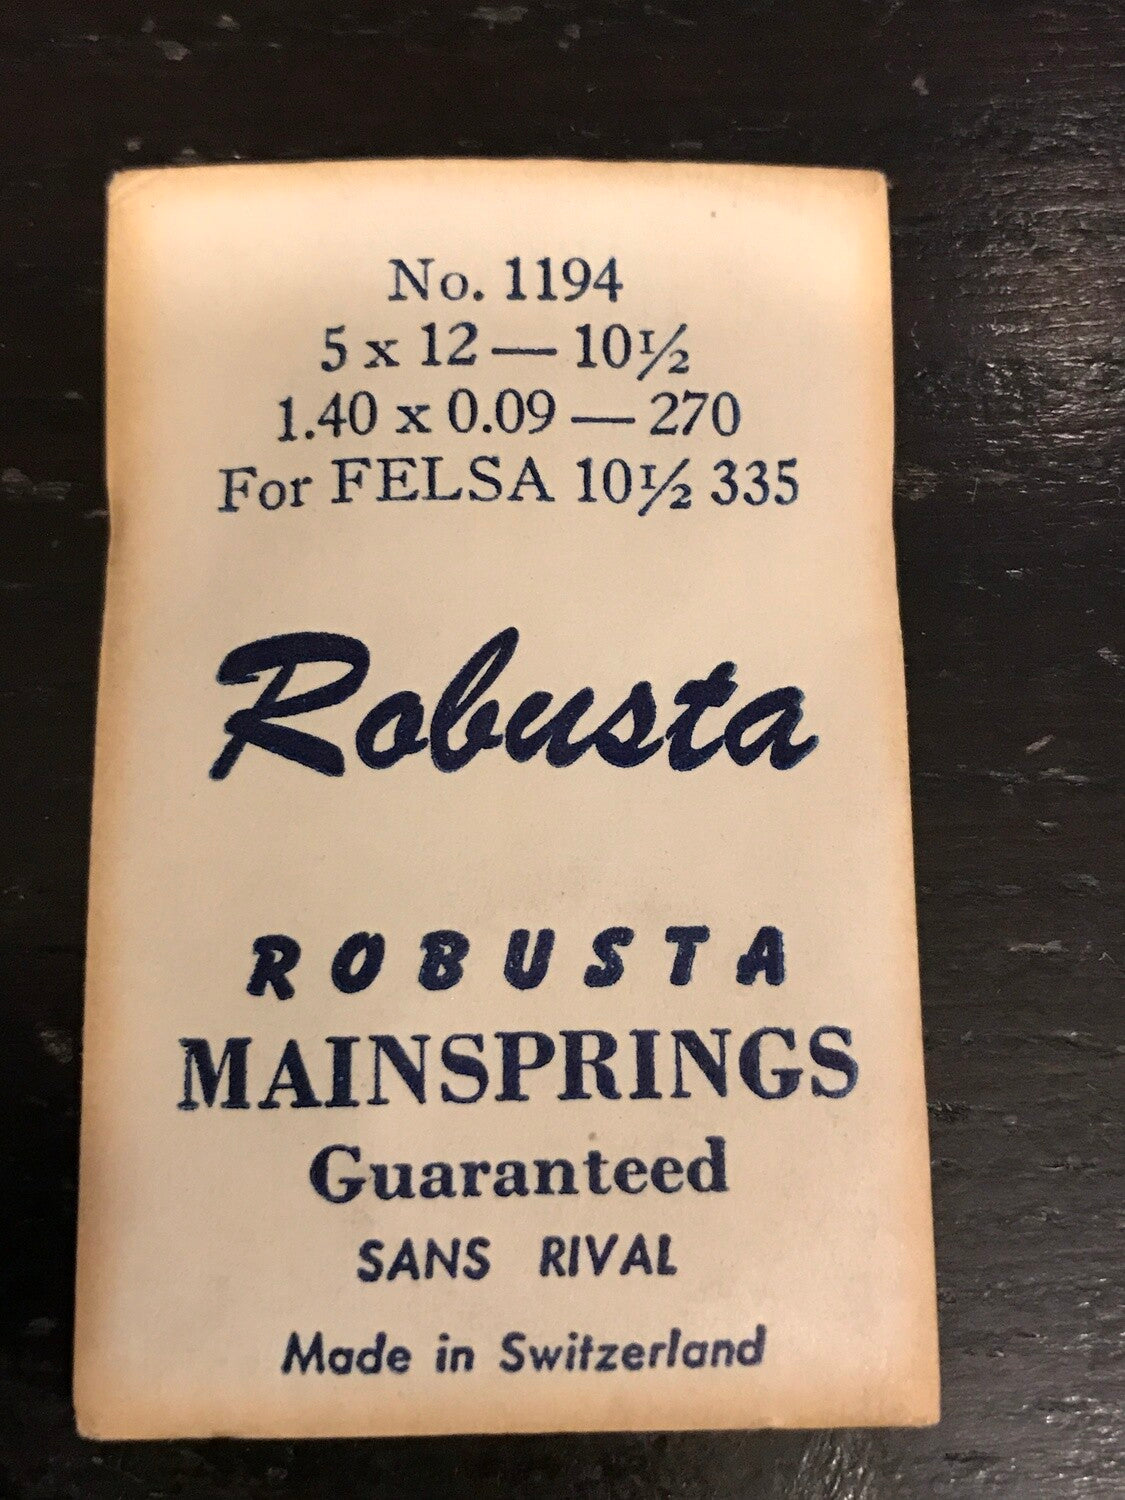 Robusta Mainspring No. 1194 for Felsa caliber 335 - Steel